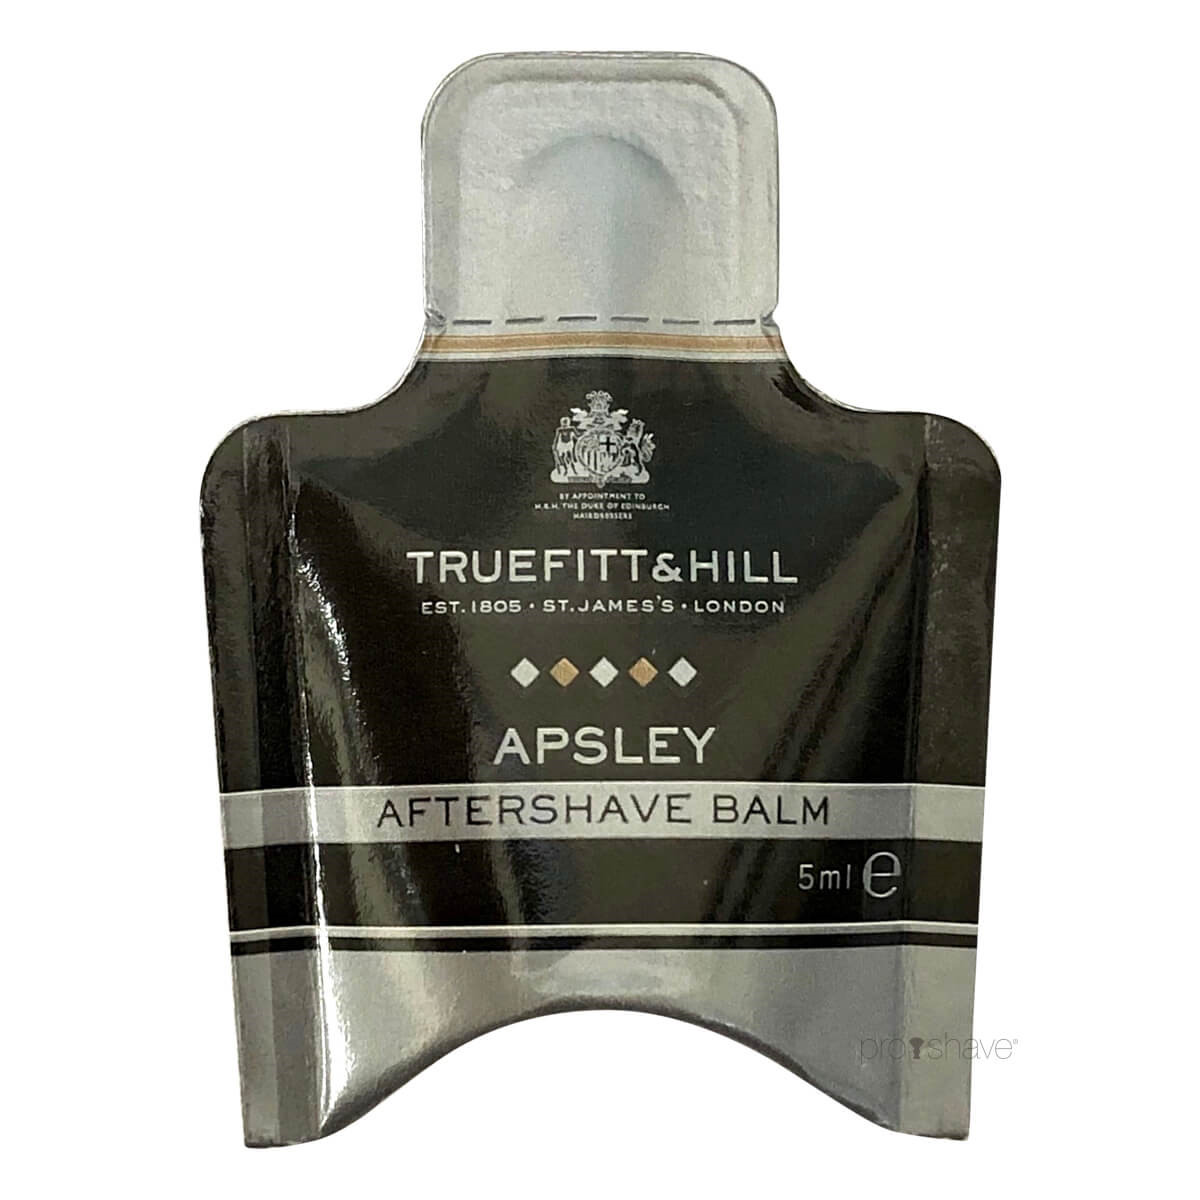 Truefitt & Hill Apsley Aftershave Balm Sample Pack, 5 ml.